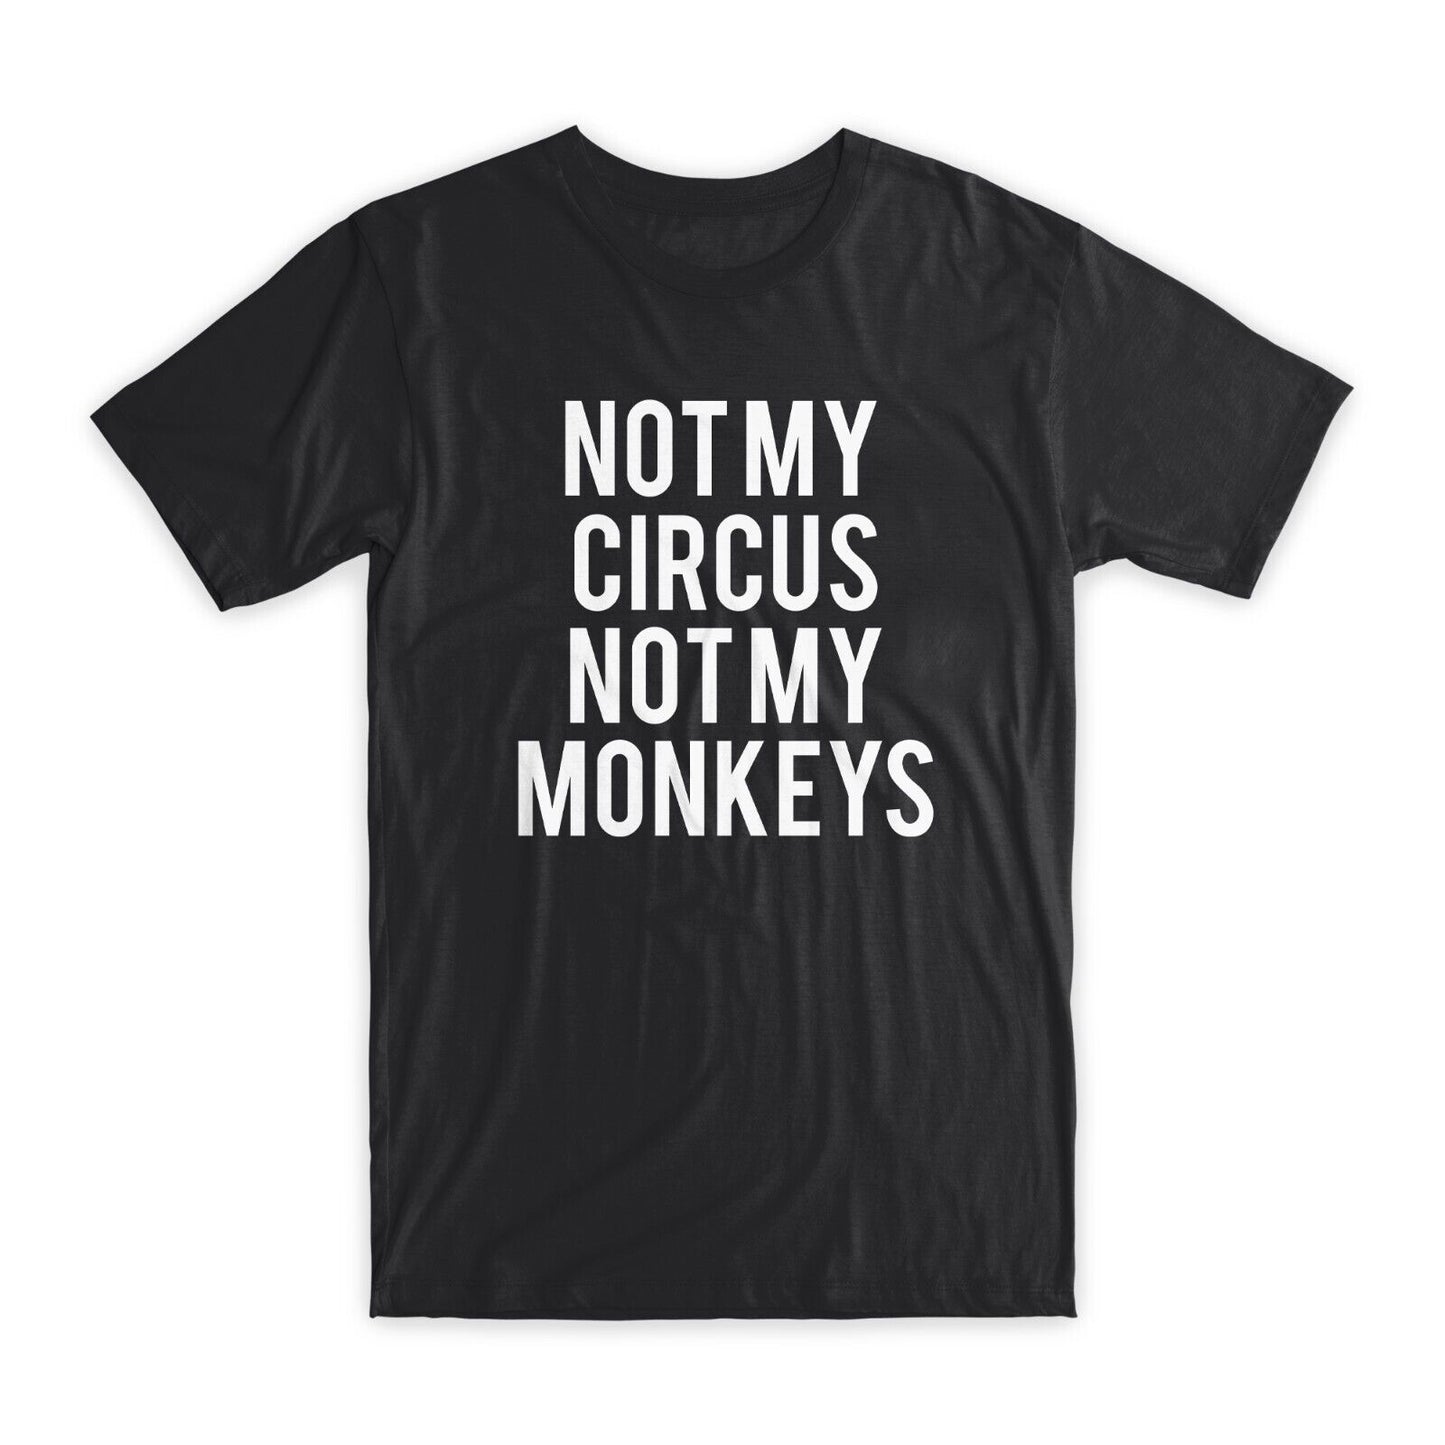 Not My Circus Not My Monkeys T-Shirt Premium Cotton Crew Neck Funny Tee Gift NEW